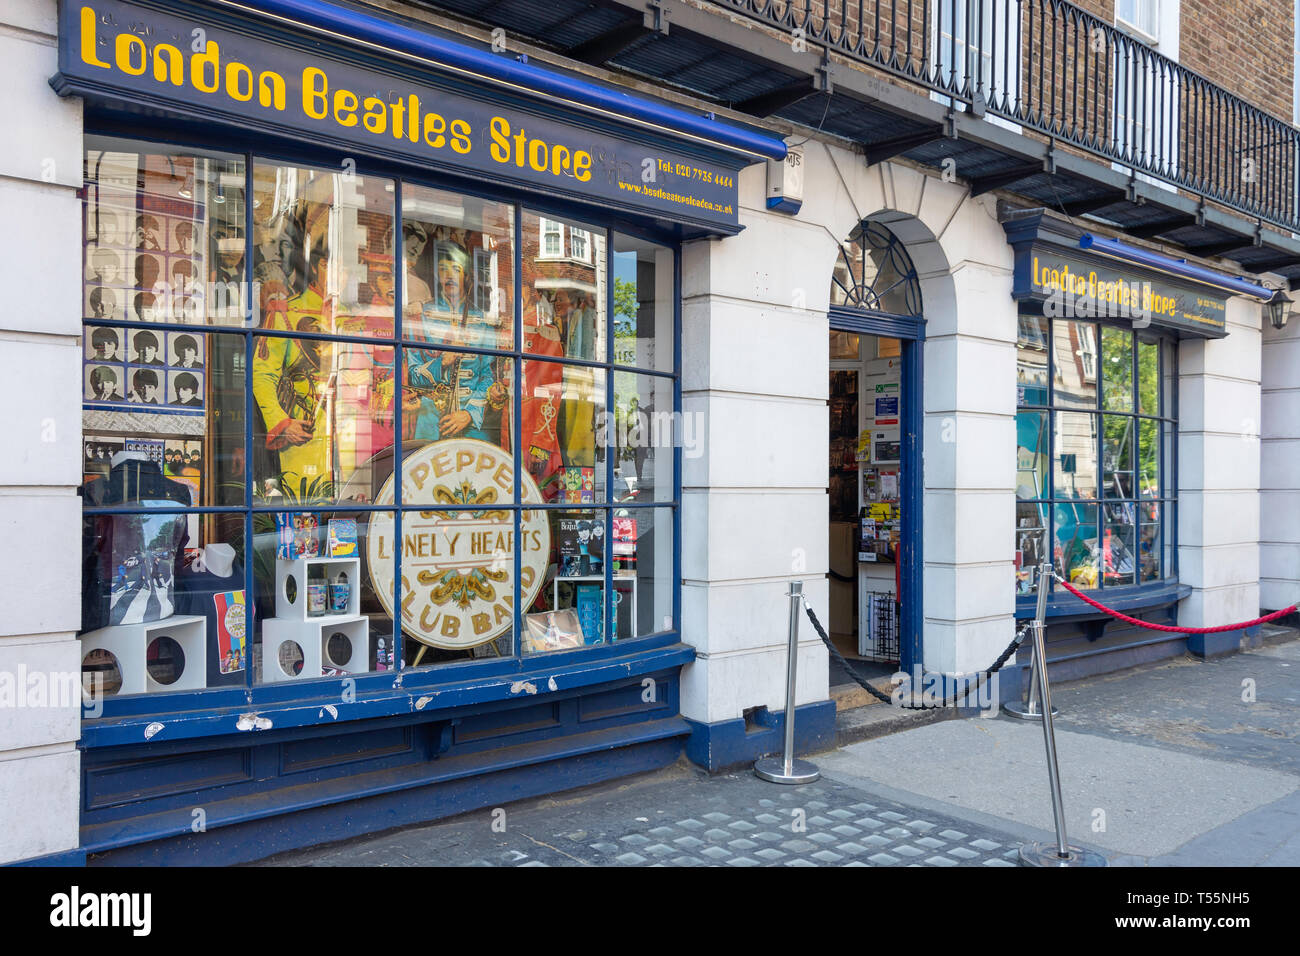 London Beatles Store, Baker Street, Marylebone, City of Westminster, Greater London, England, United Kingdom Stock Photo